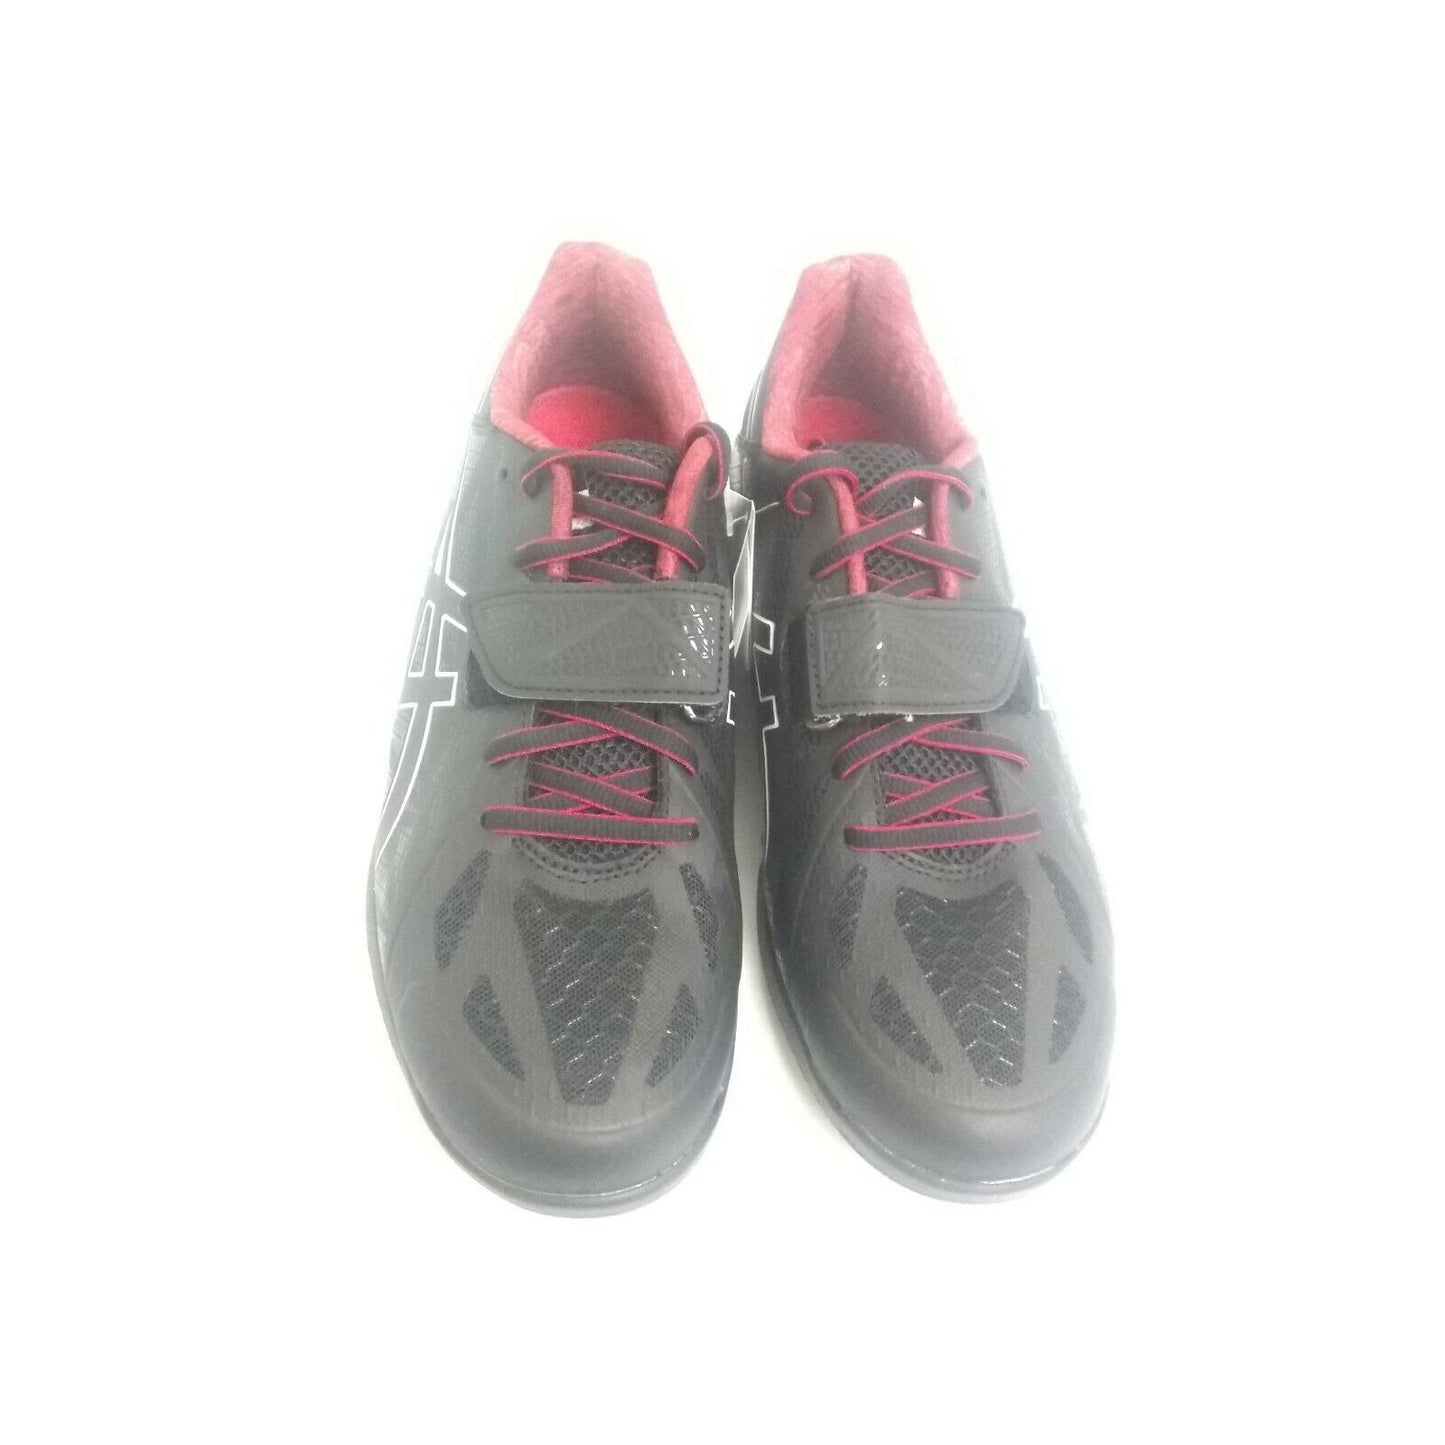 Asics Men's Lift Master Lite Black Onyx True Red Size 7.5 US wrestling shoes